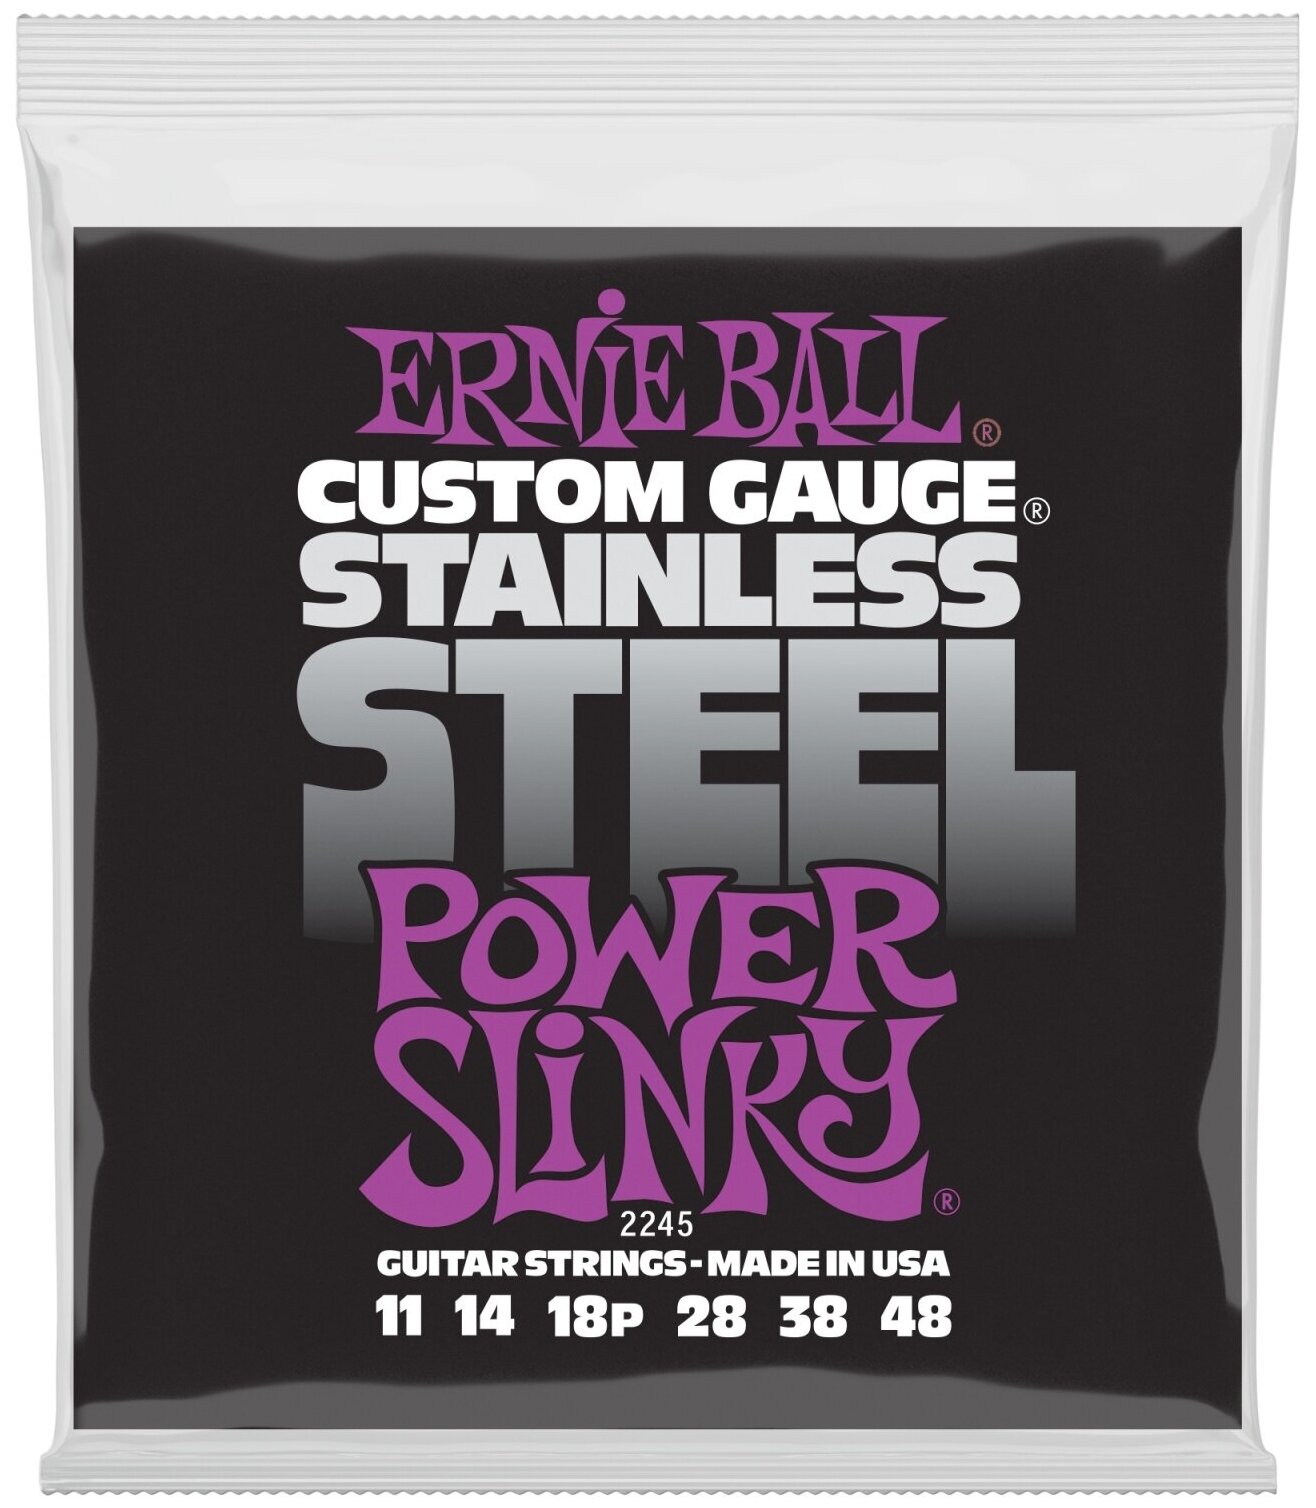 ERNIE BALL 2245 Stainless Steel Slinky Power 11-48 Струны для электрогитары